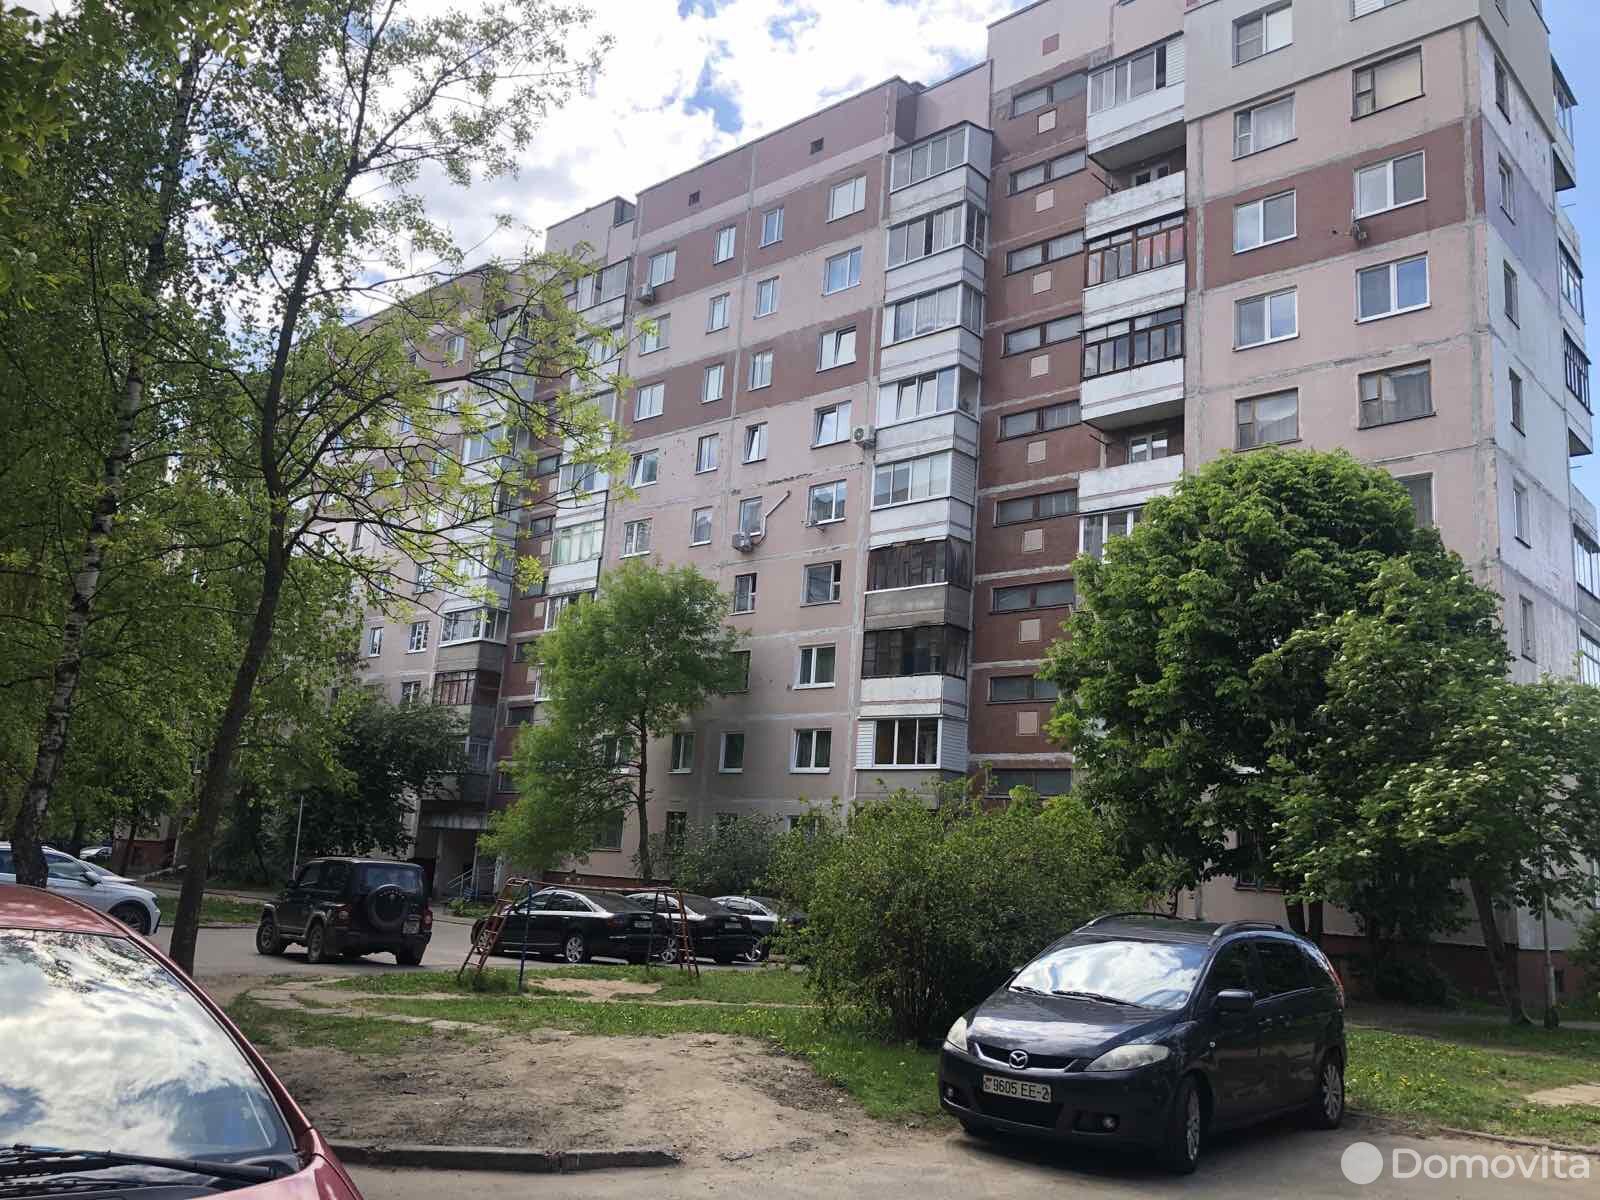 квартира, Витебск, ул. Чкалова, д. 23/2, стоимость продажи 135 097 р.